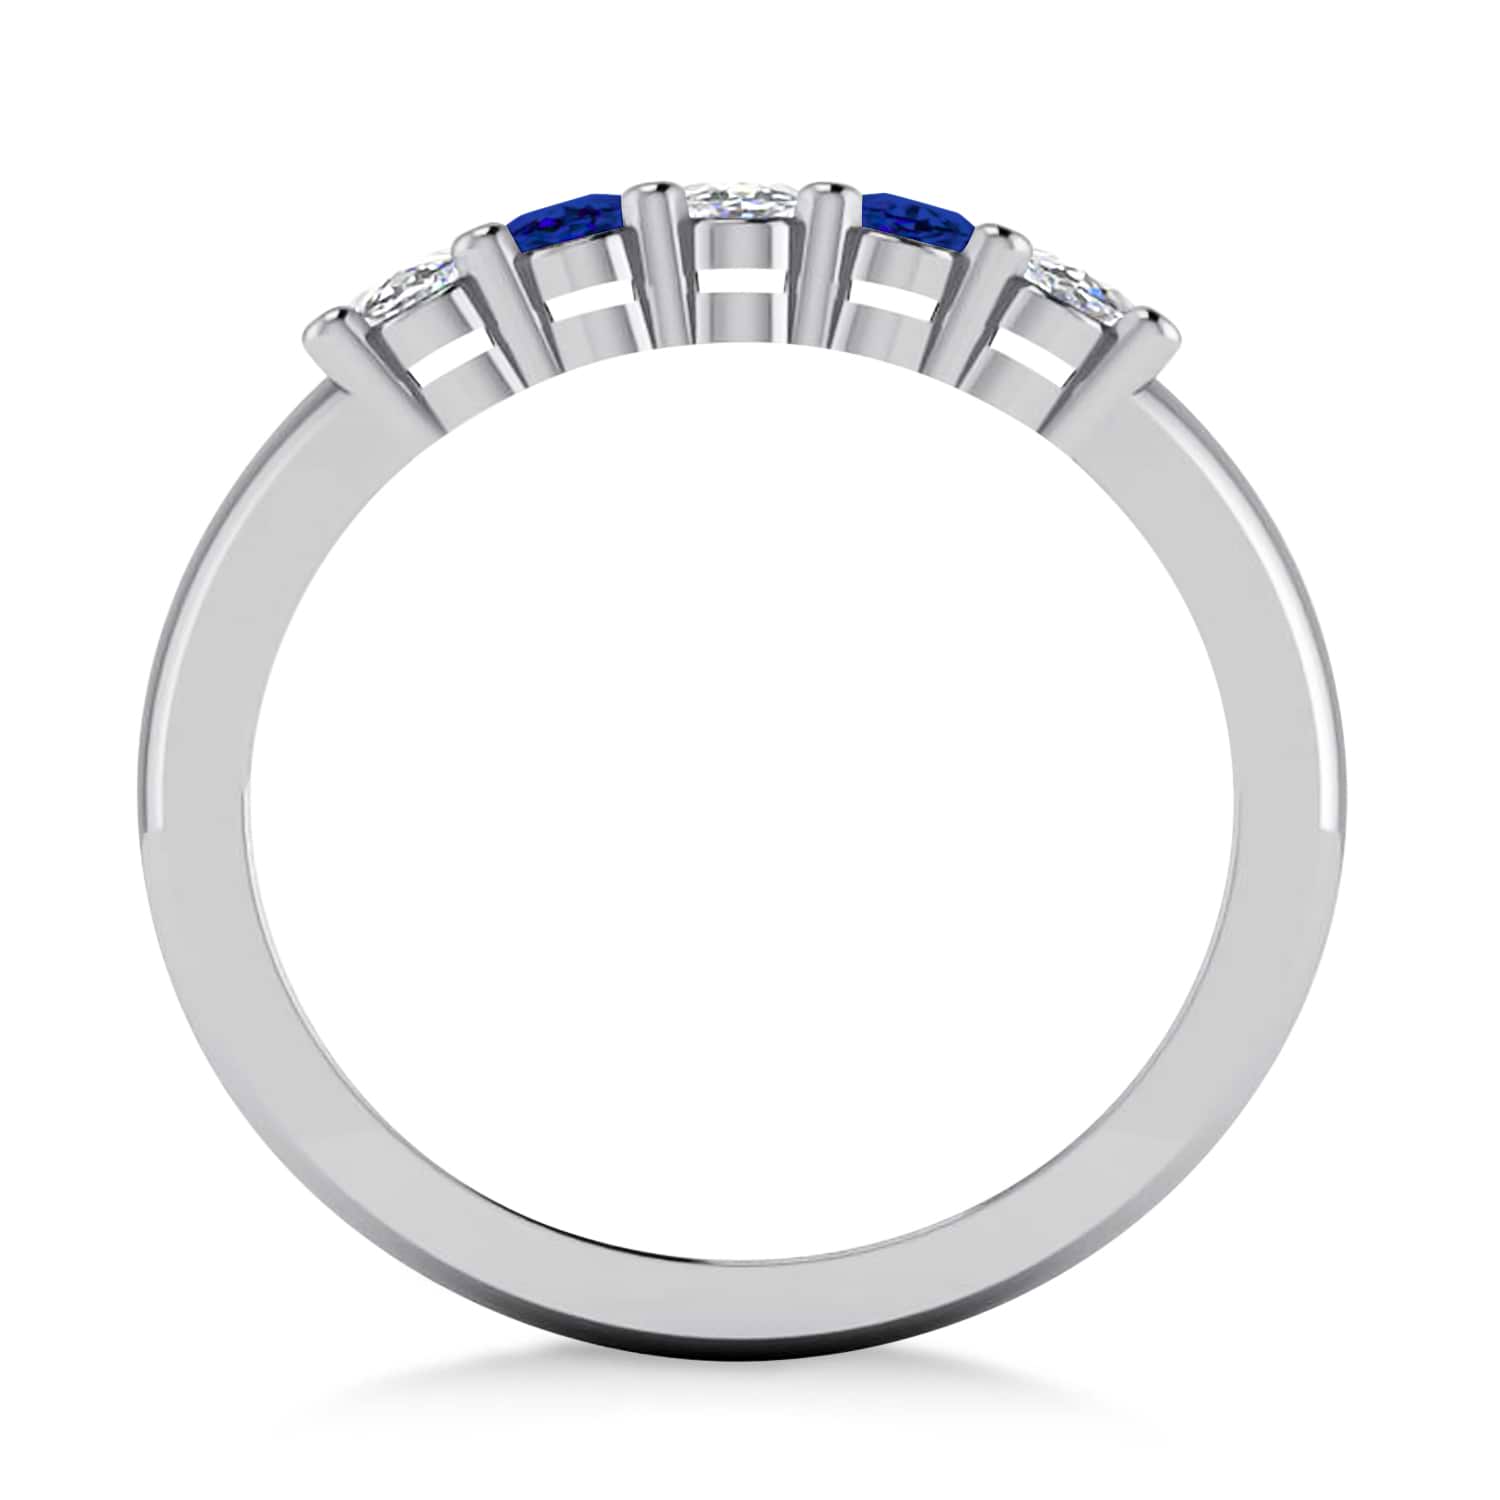 Oval Diamond & Blue Sapphire Five Stone Ring 14k White Gold (1.00ct)